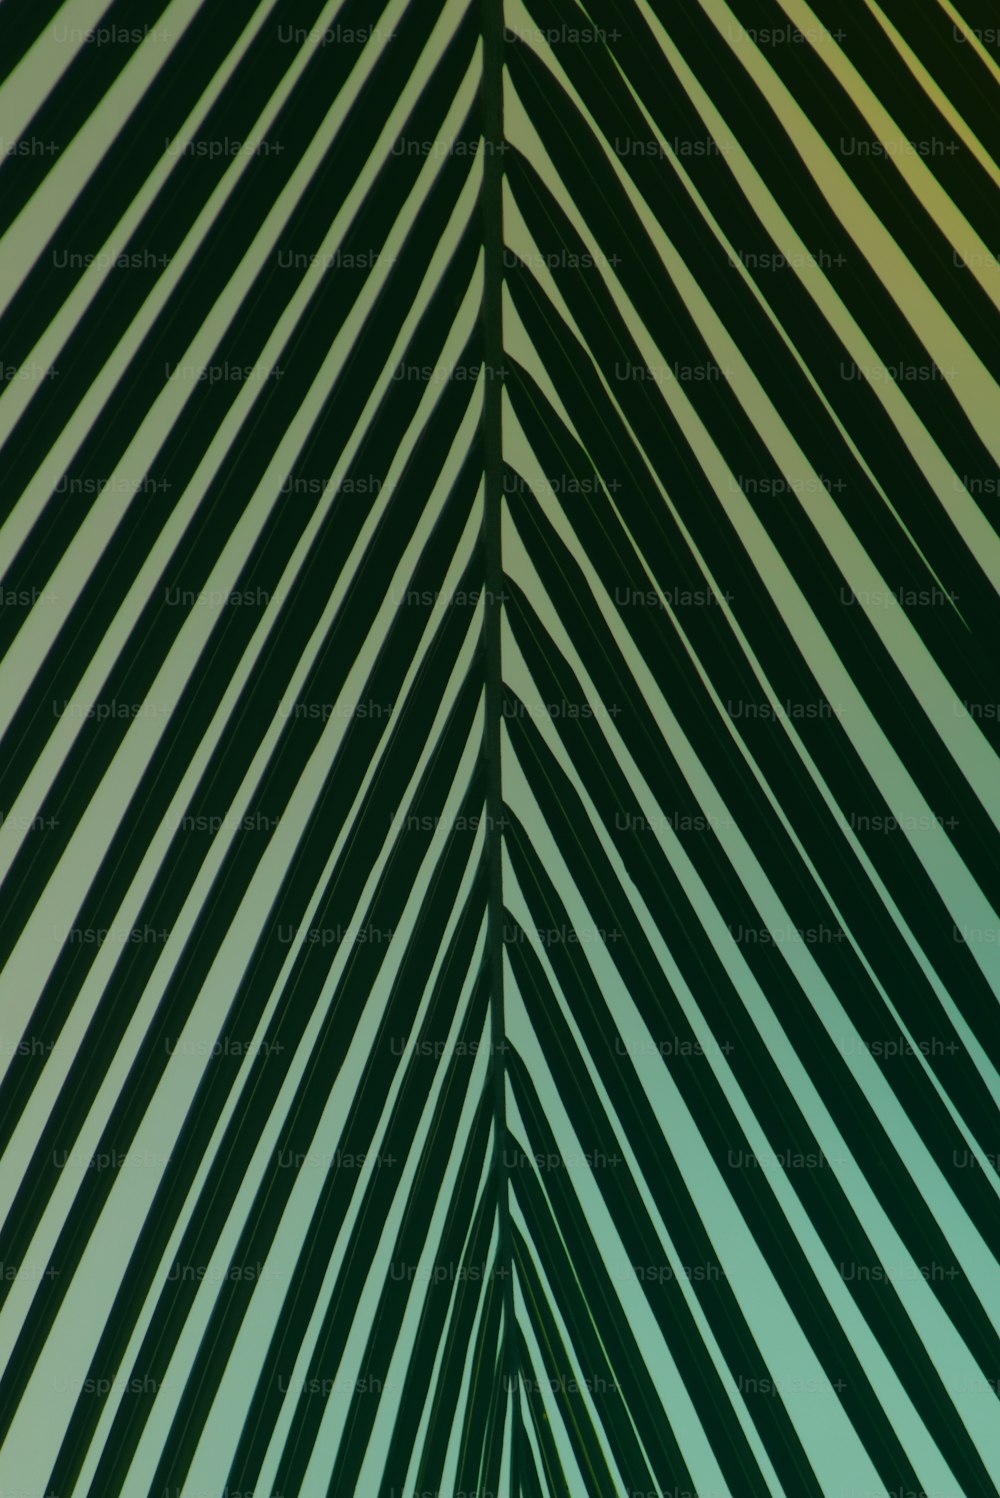 Green aesthetic wallpaper by juli3569 on DeviantArt